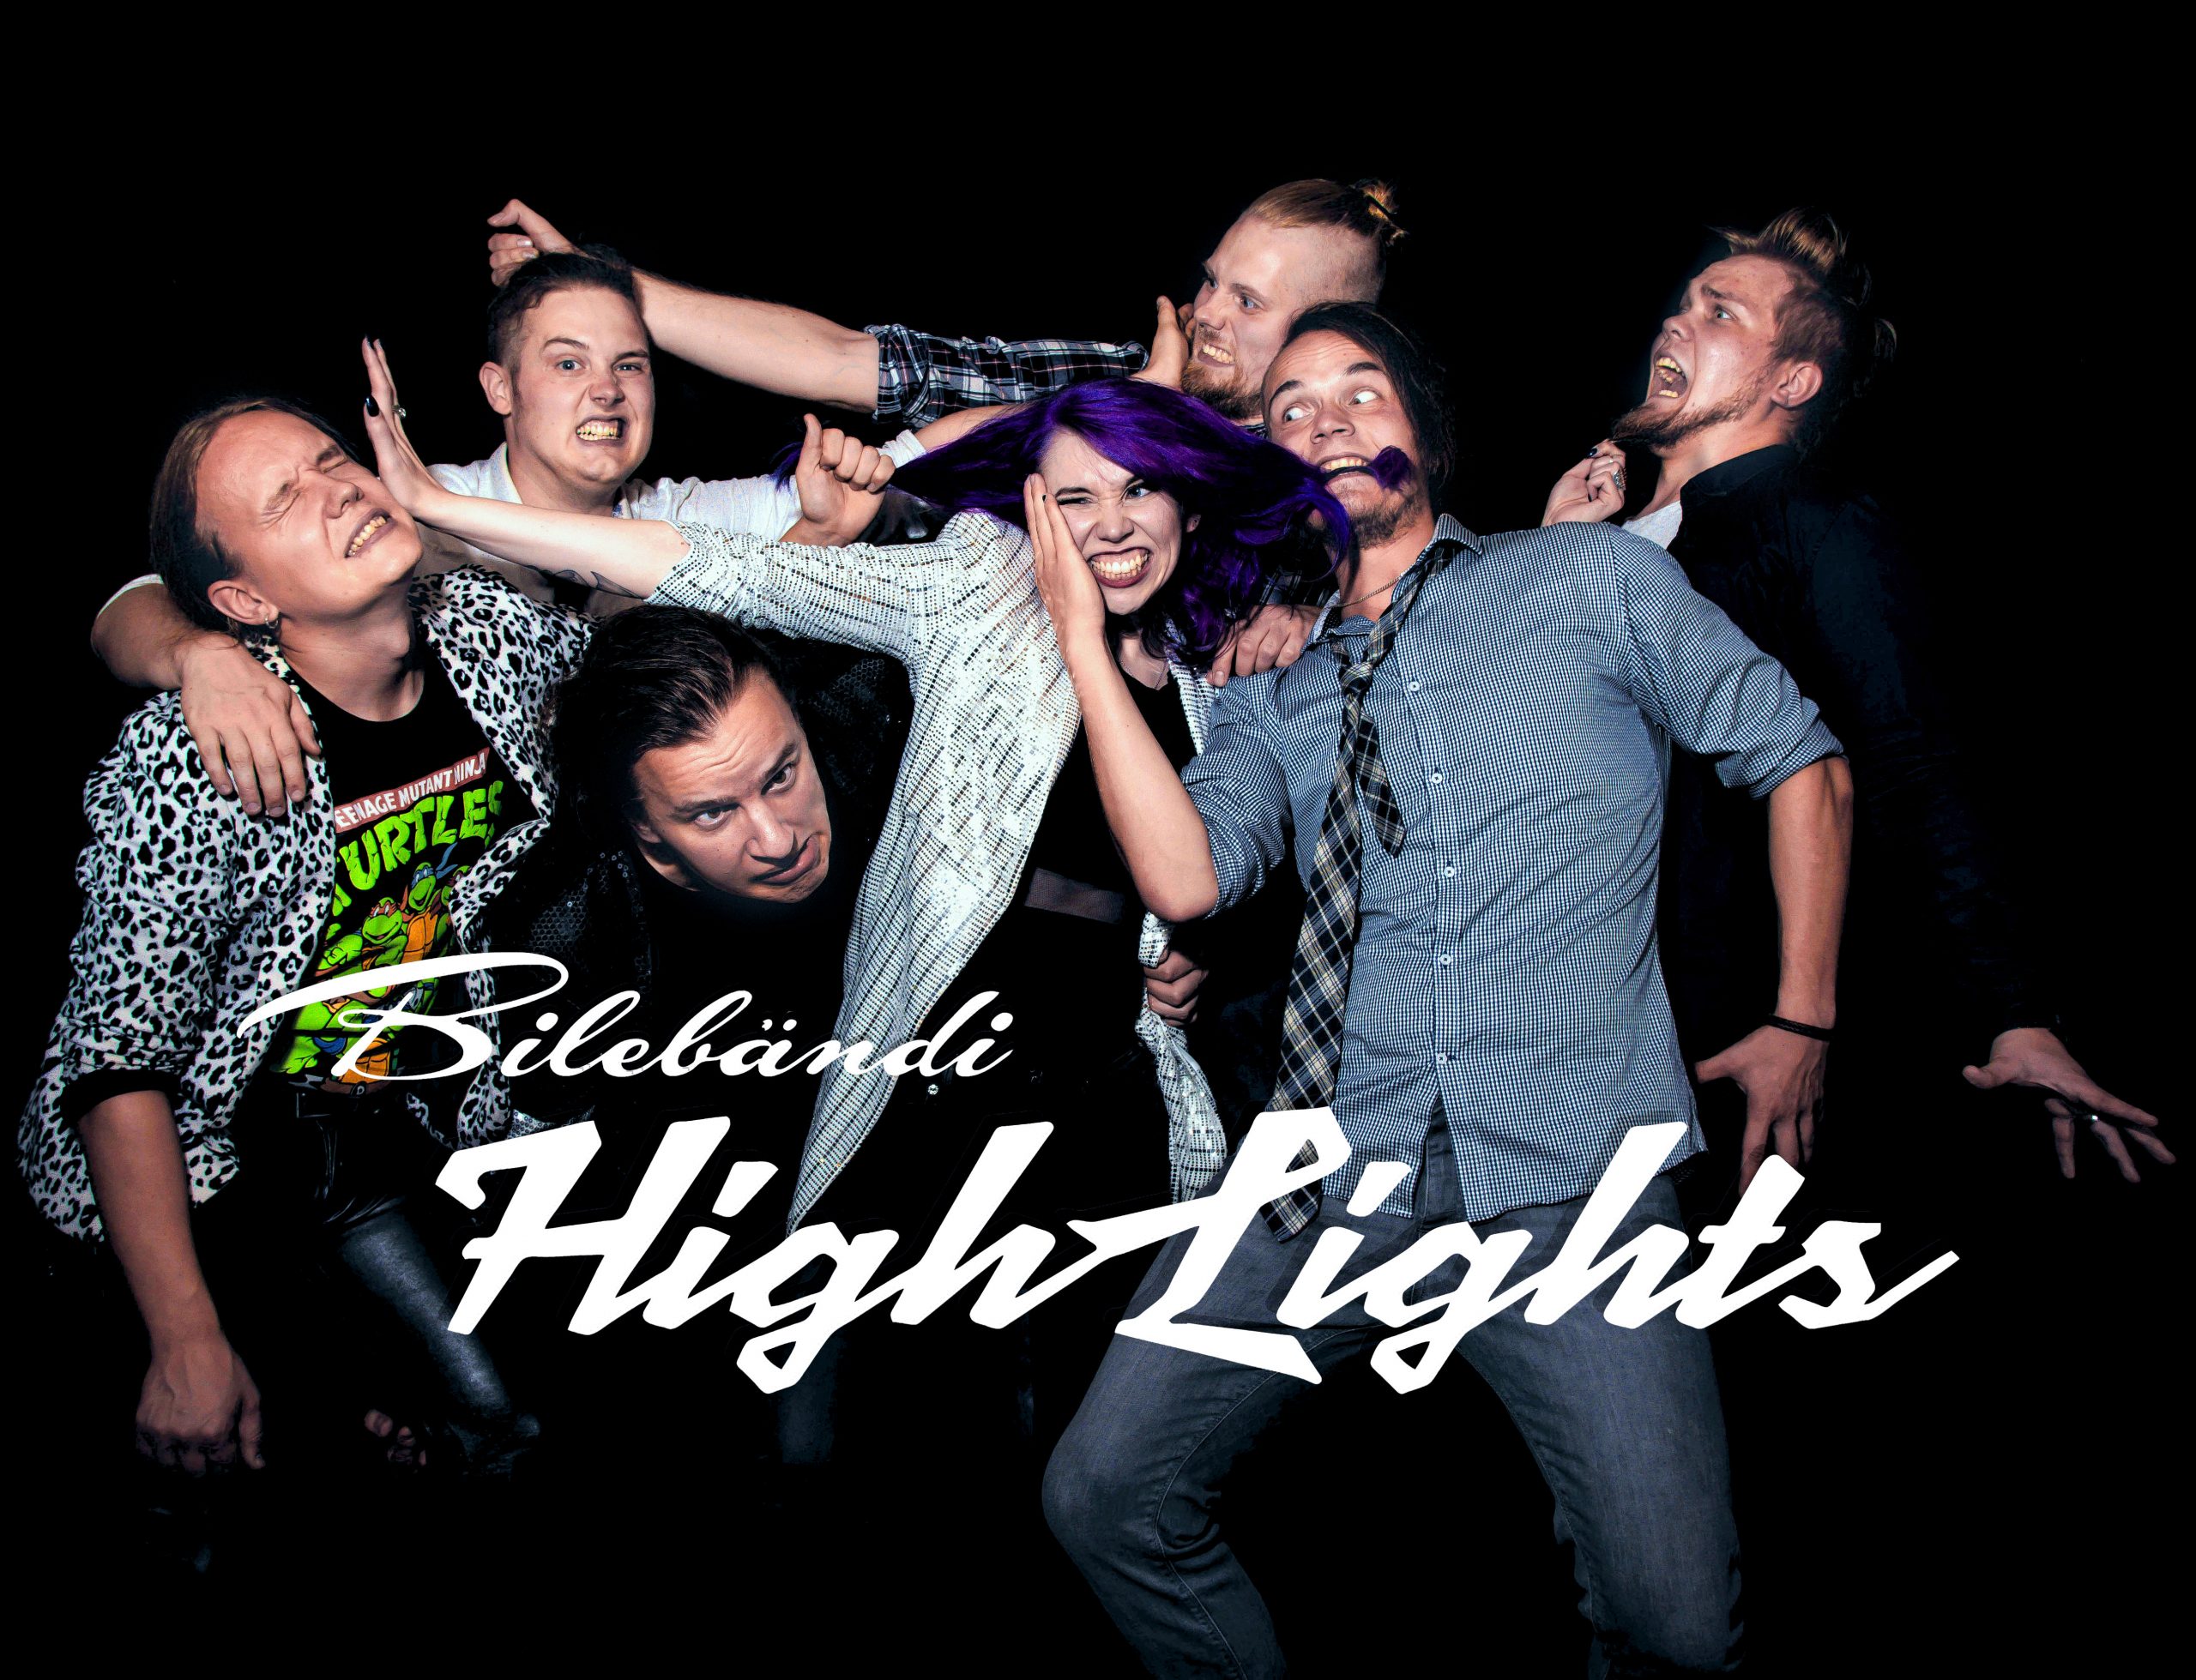 Bilebändi HighLights